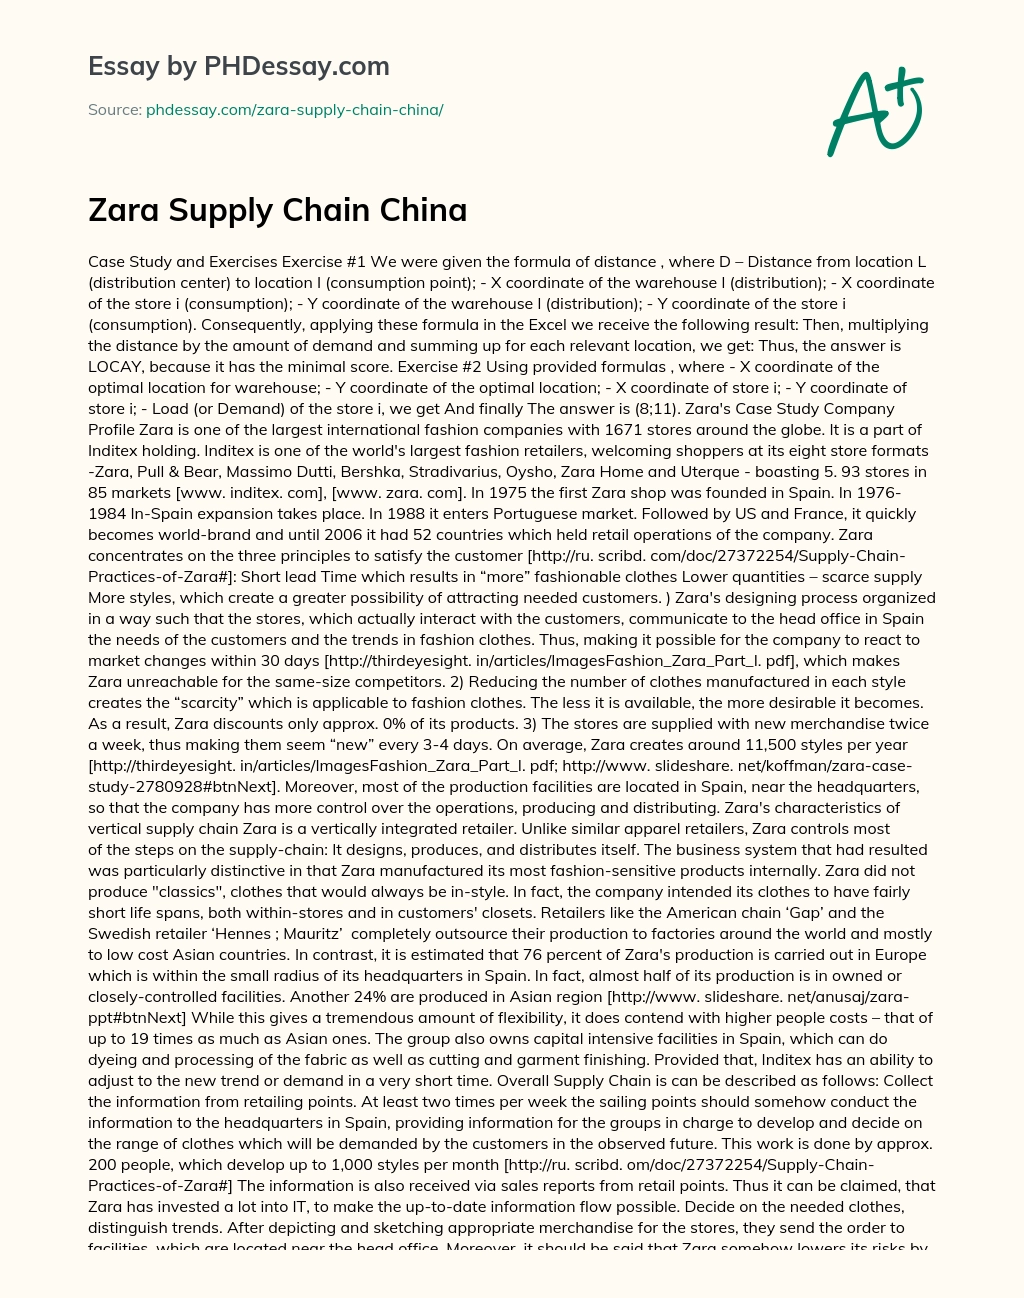 Zara Supply Chain China essay